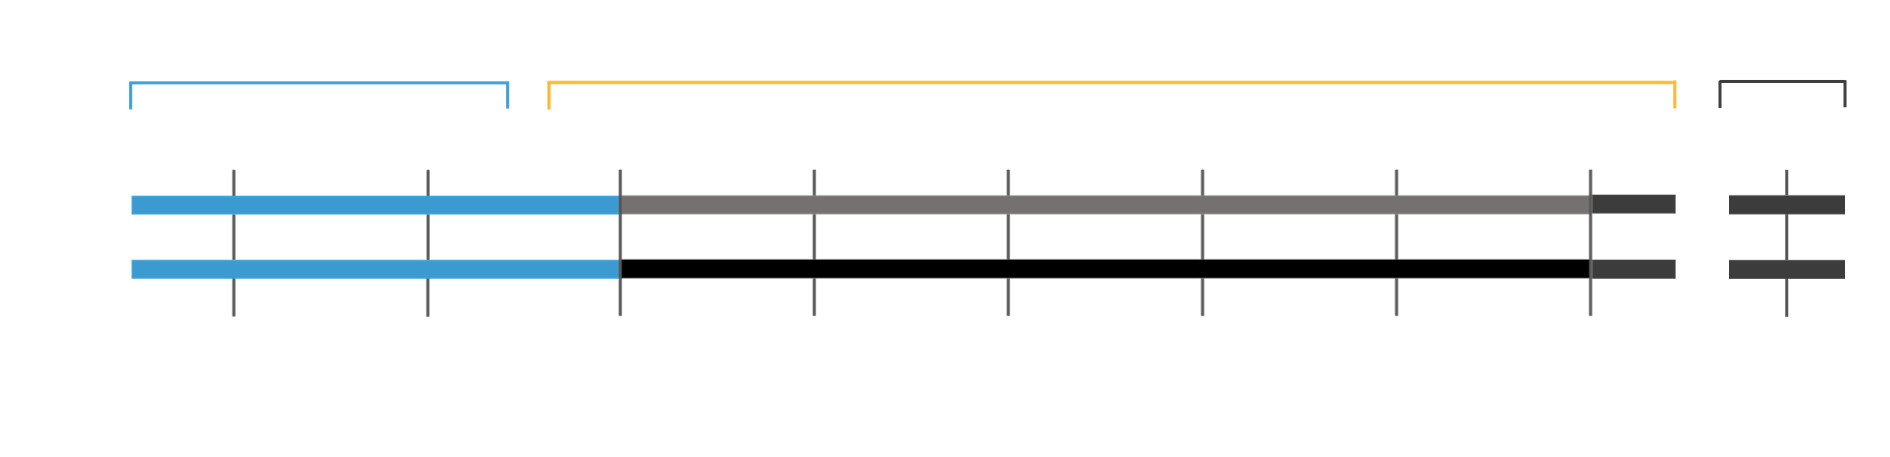 Interwencja-2-2